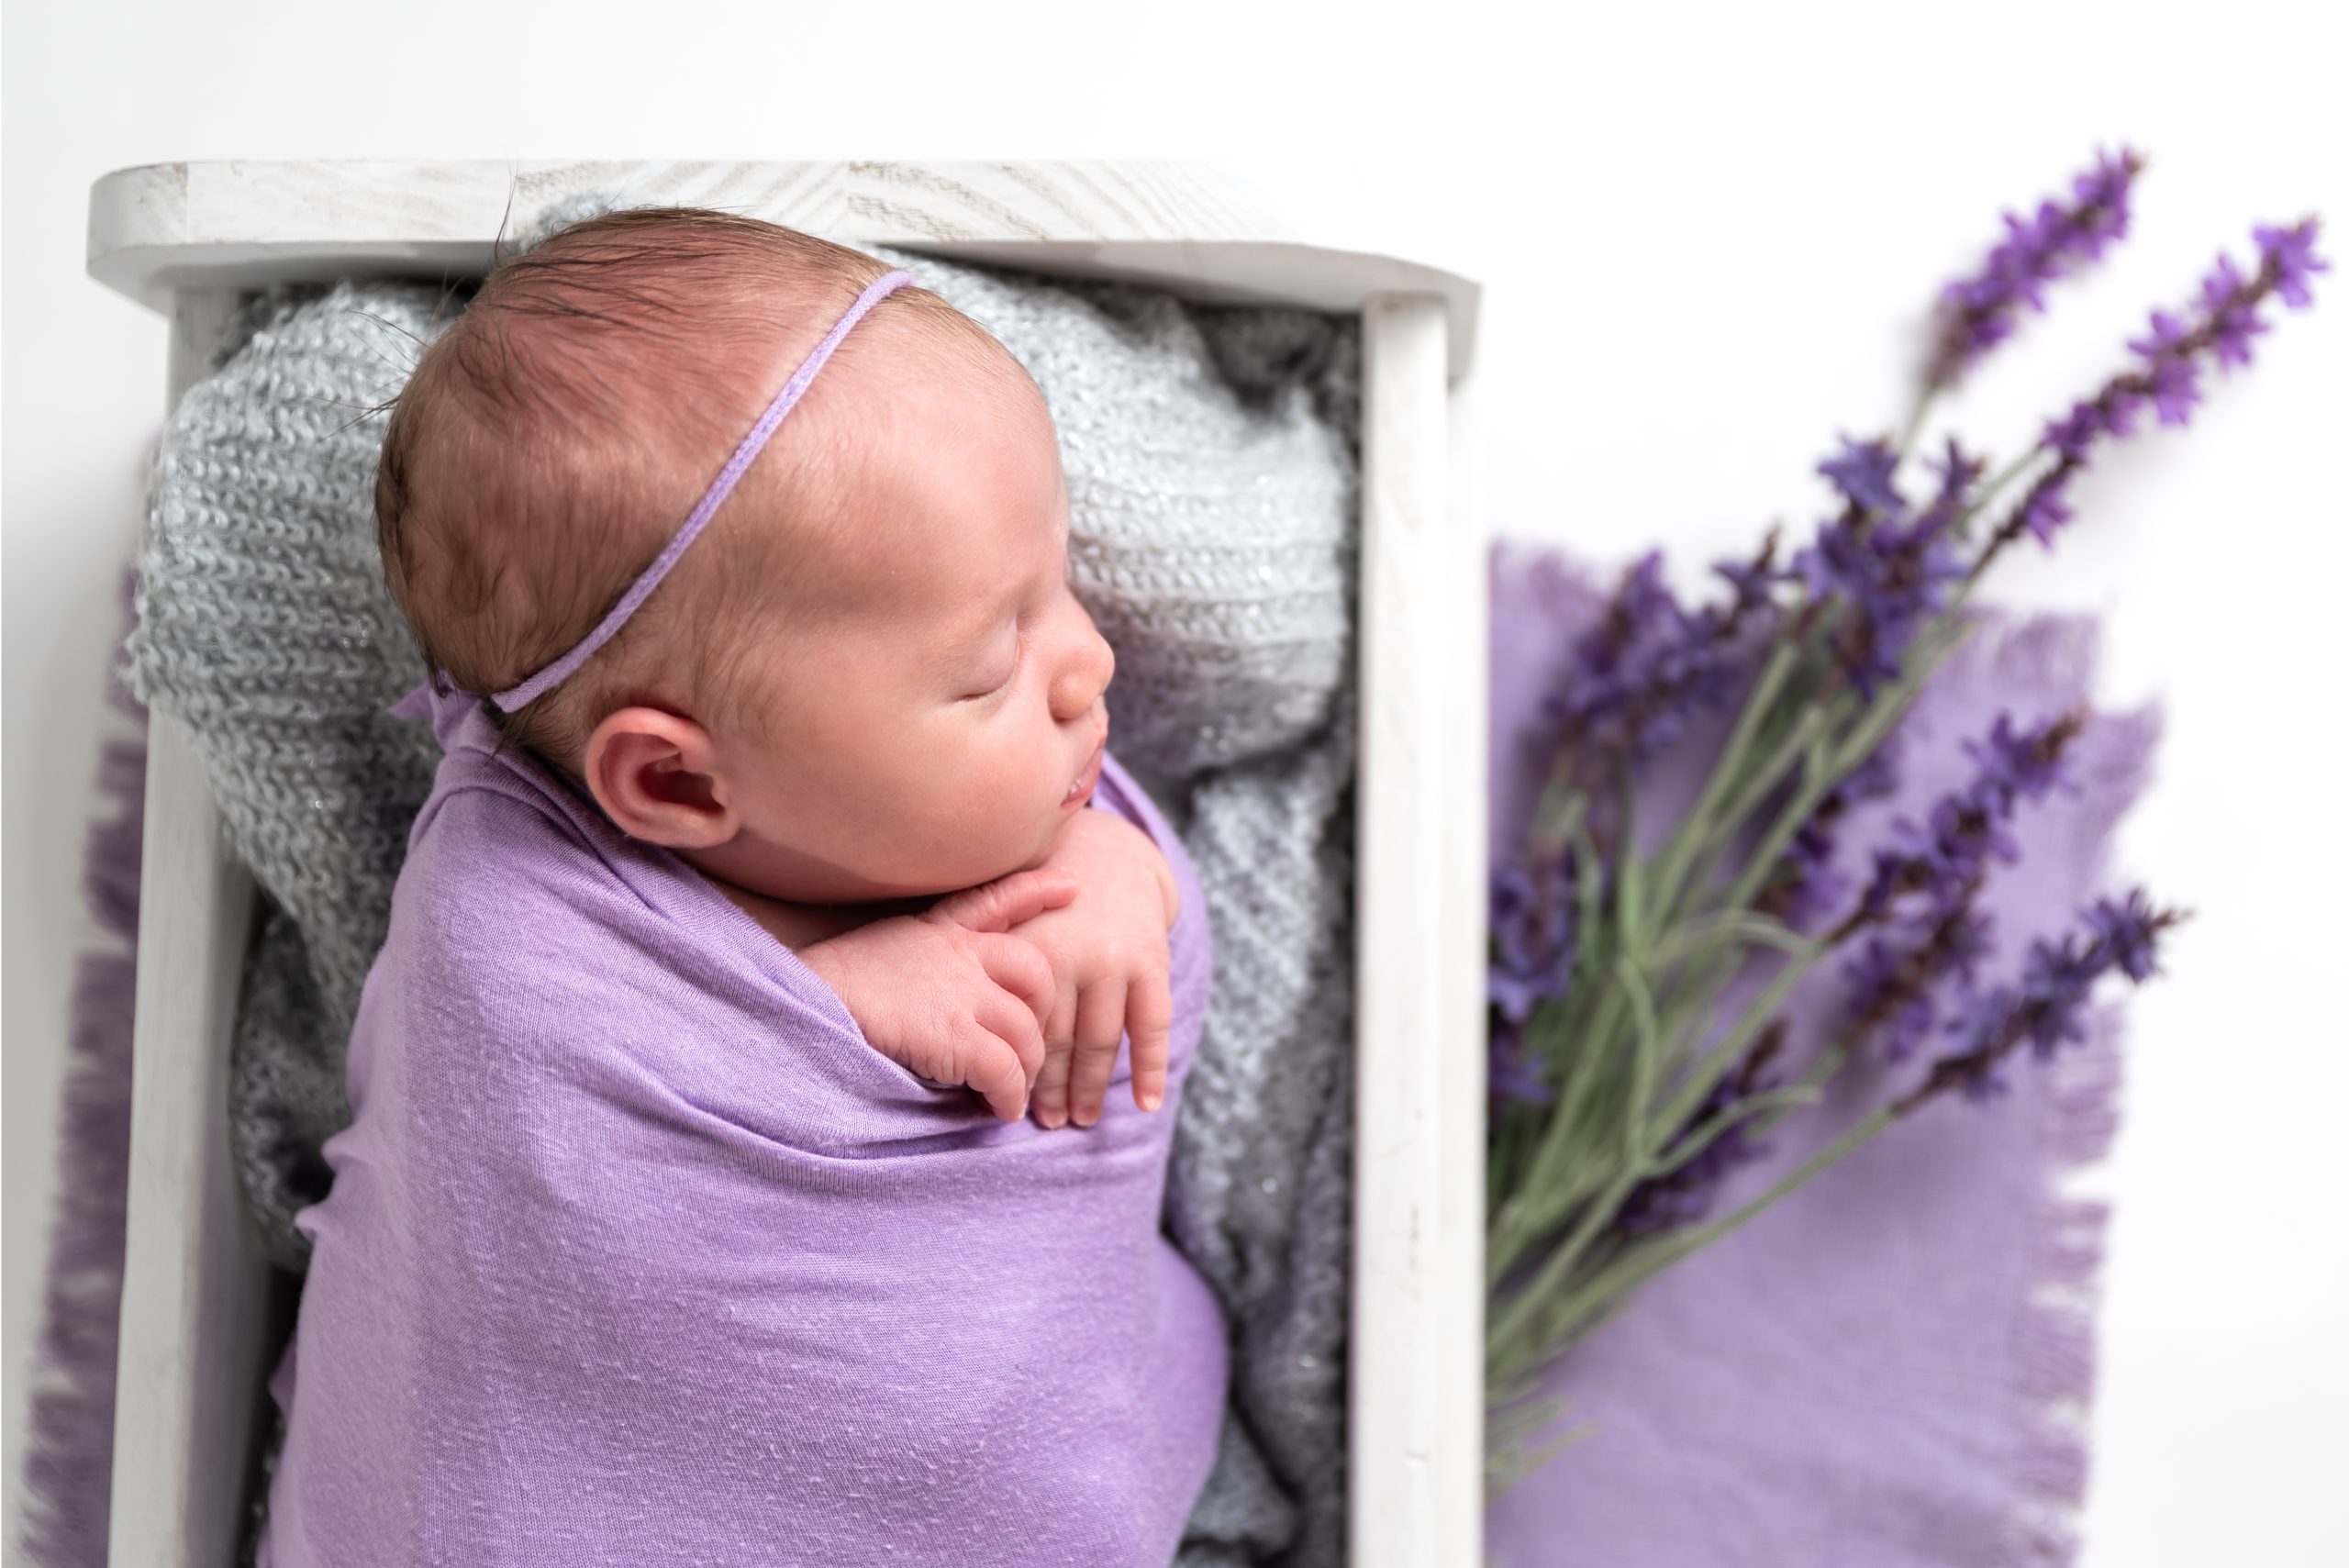 Is Newborn Photography Safe?